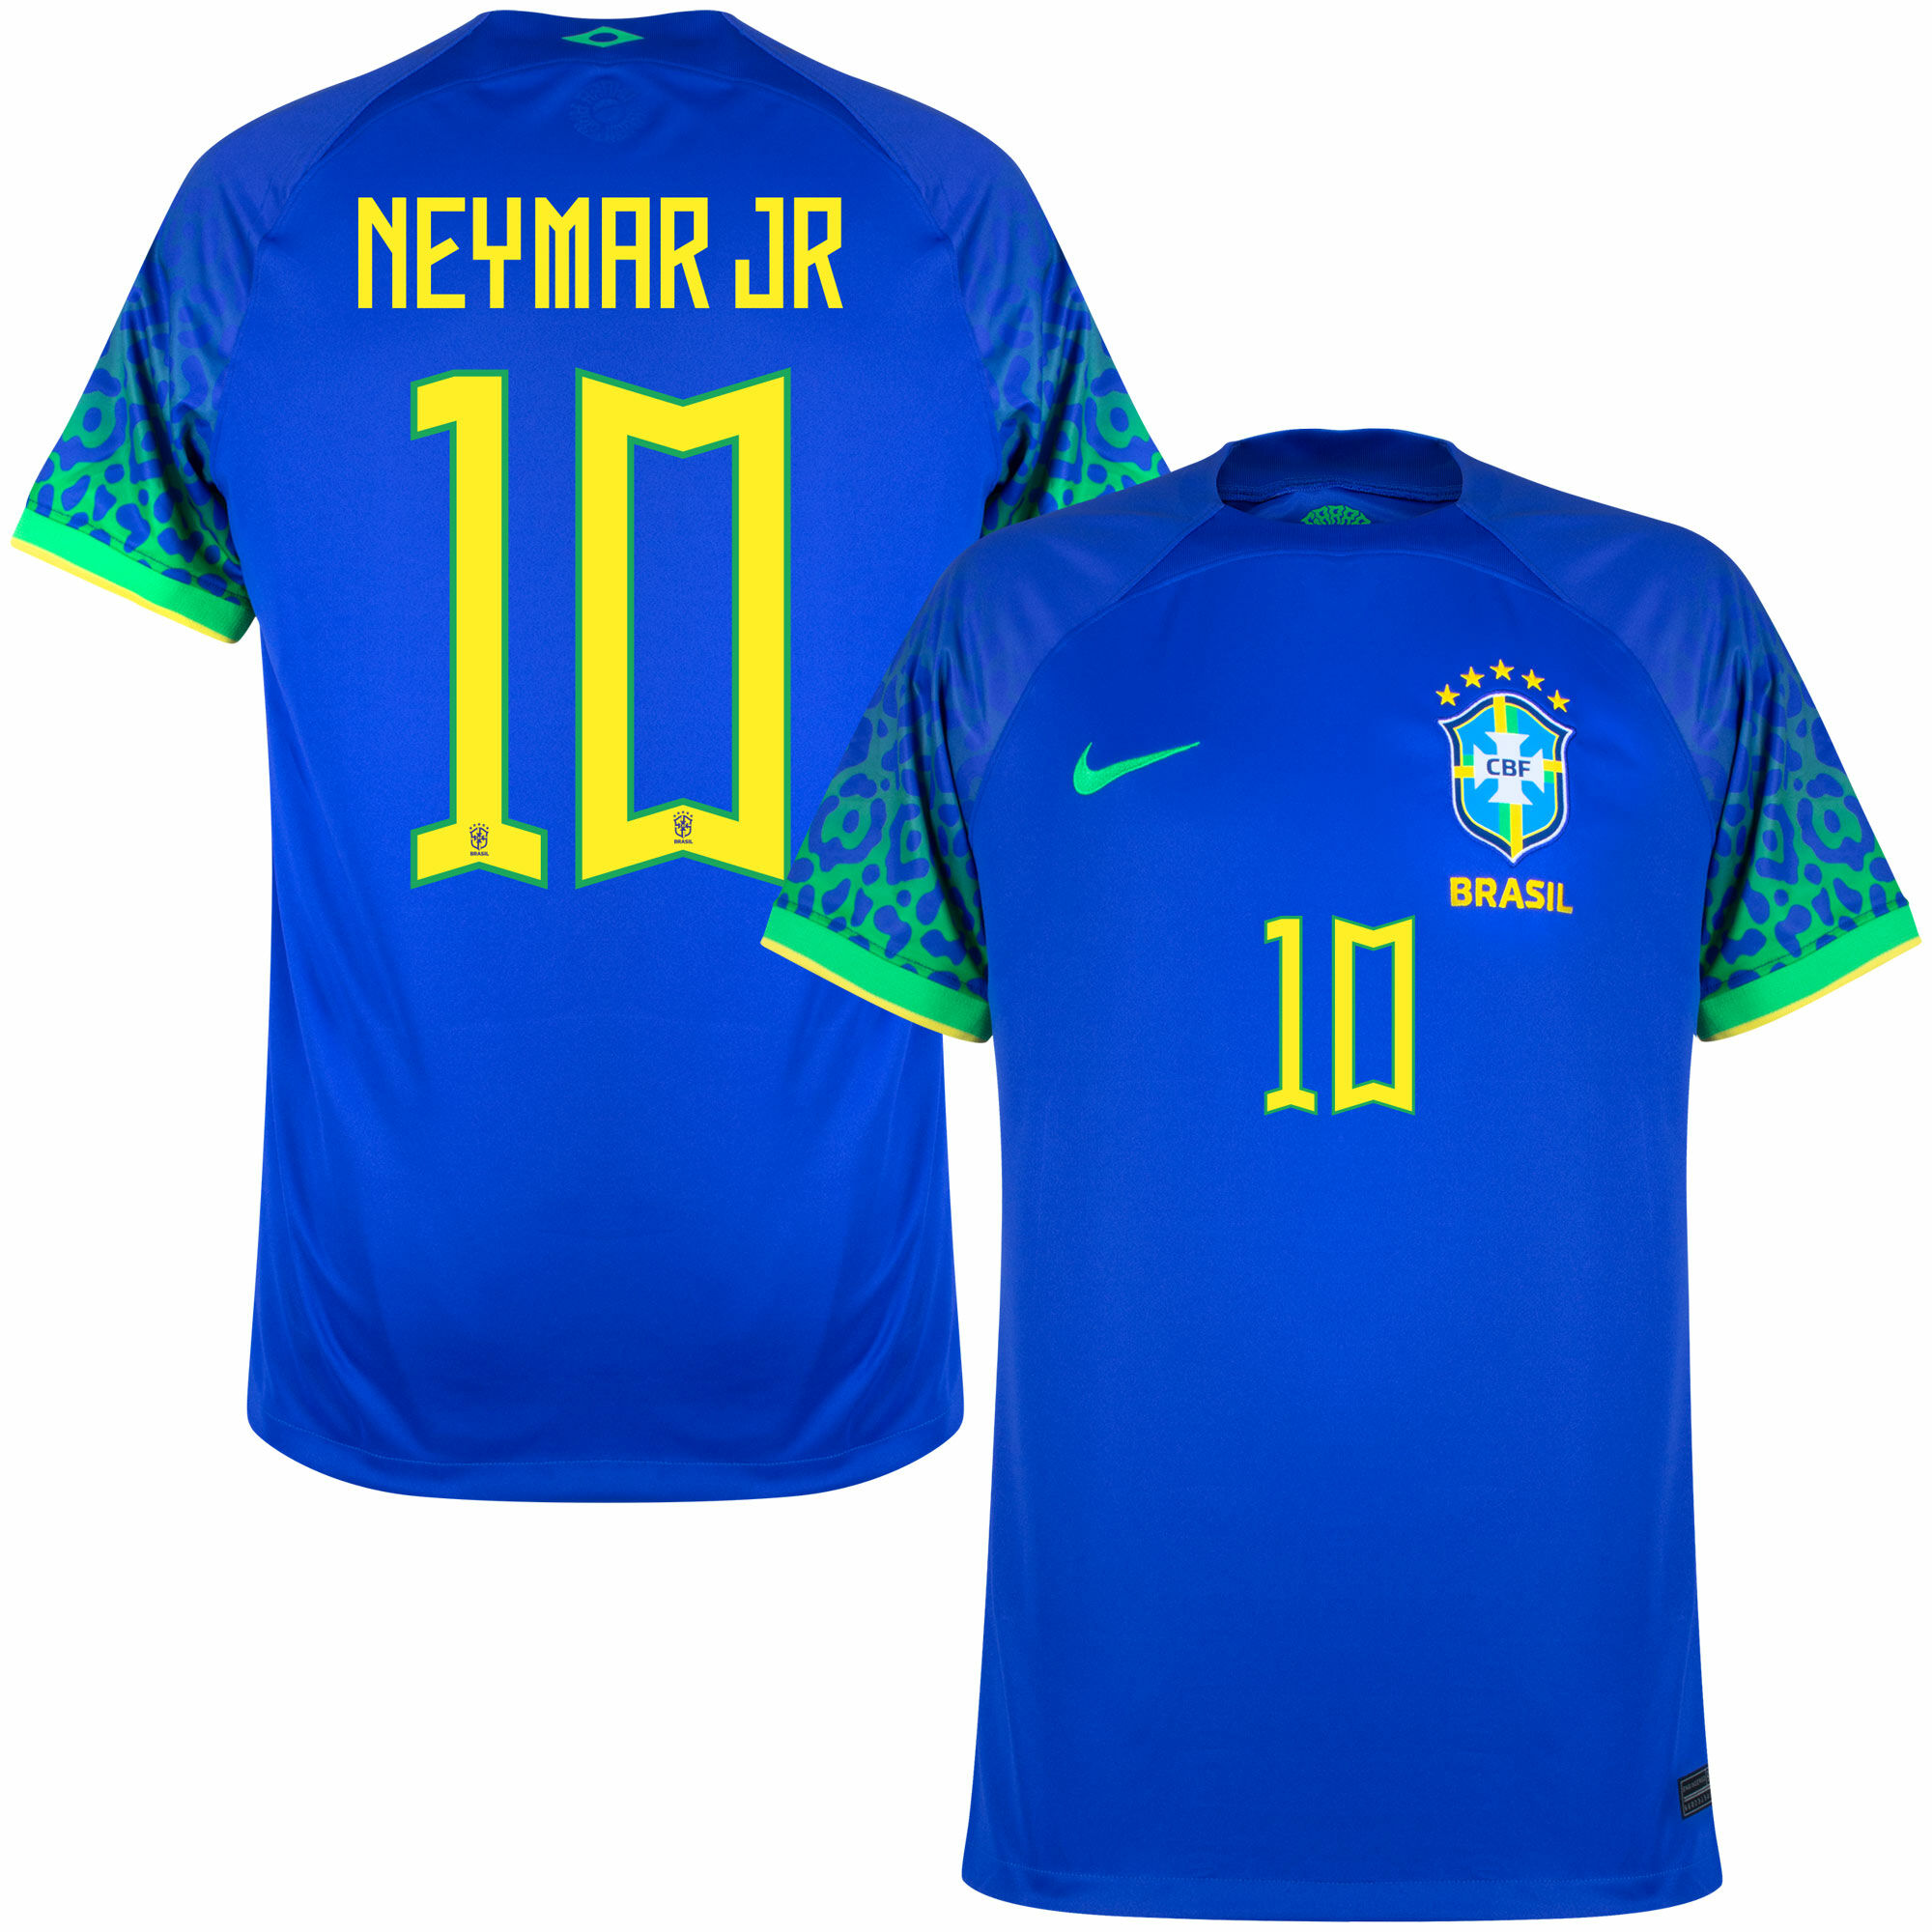 Kaufe Brasilien Fussball Fusskball Trikot 2022/23 - Neymar